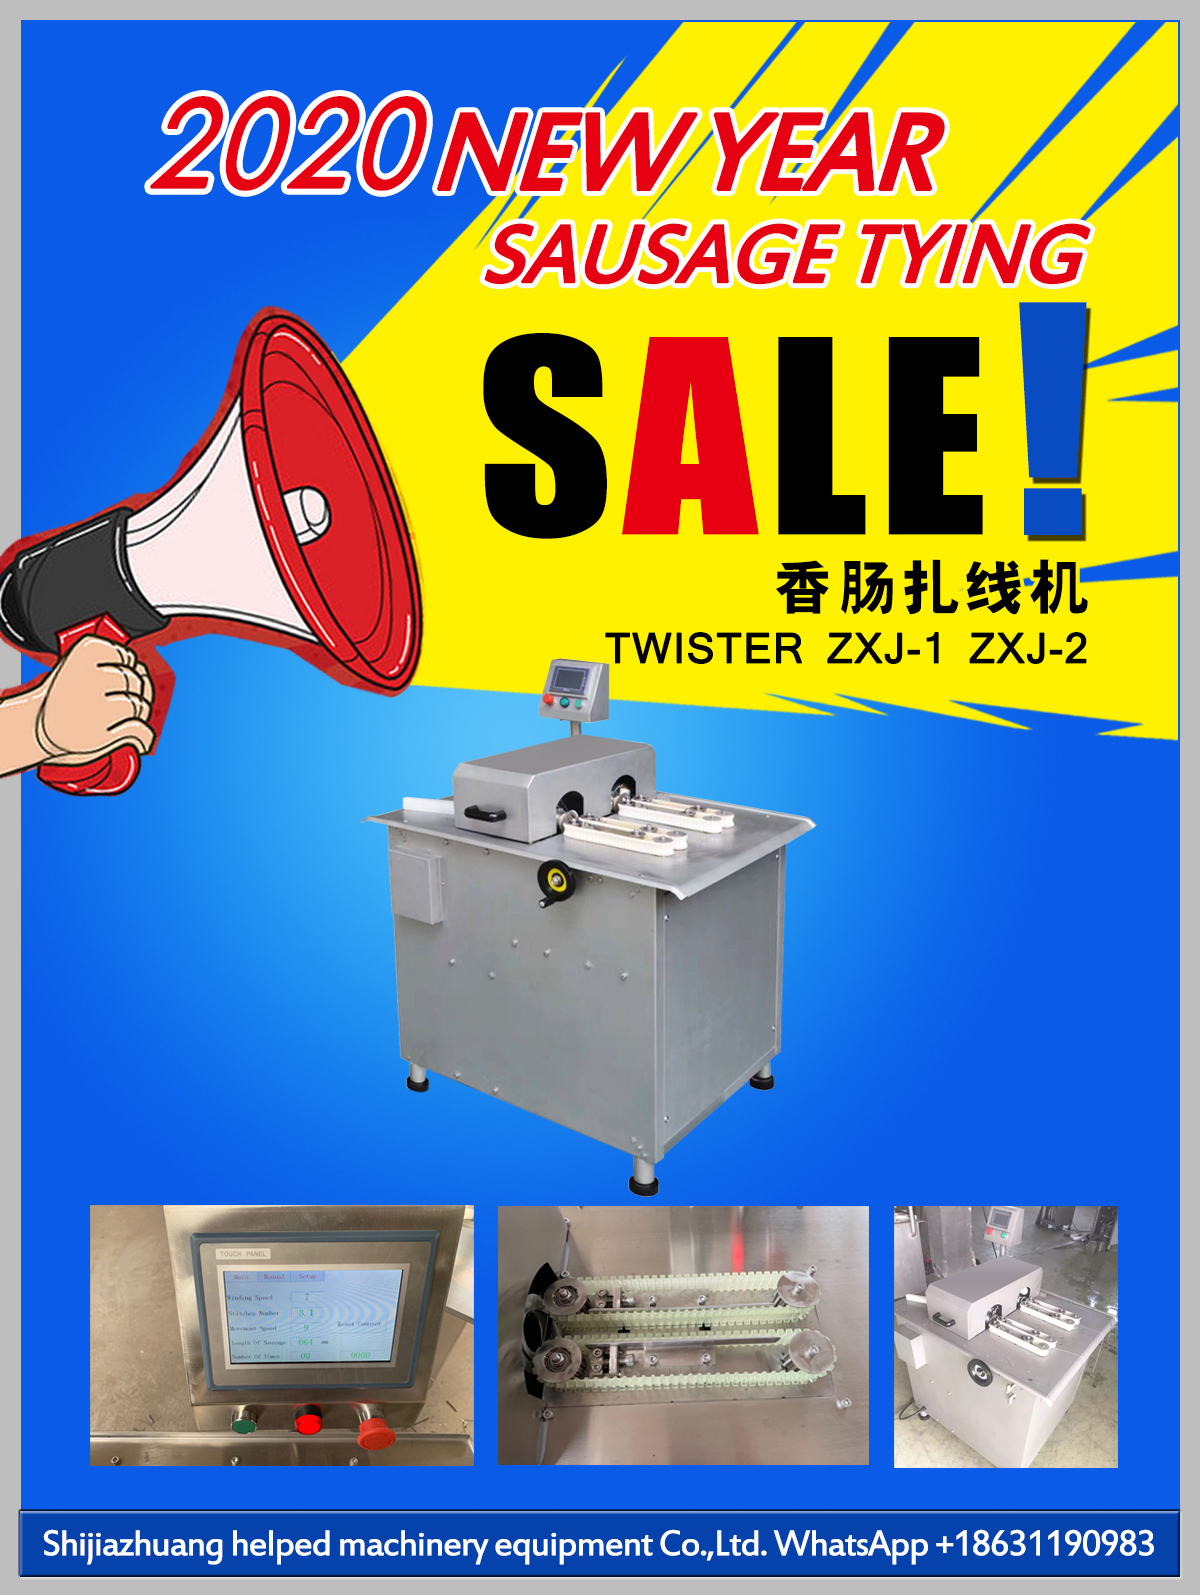 Vacuum Sausage Filler Stuffer For Food Processing Machine